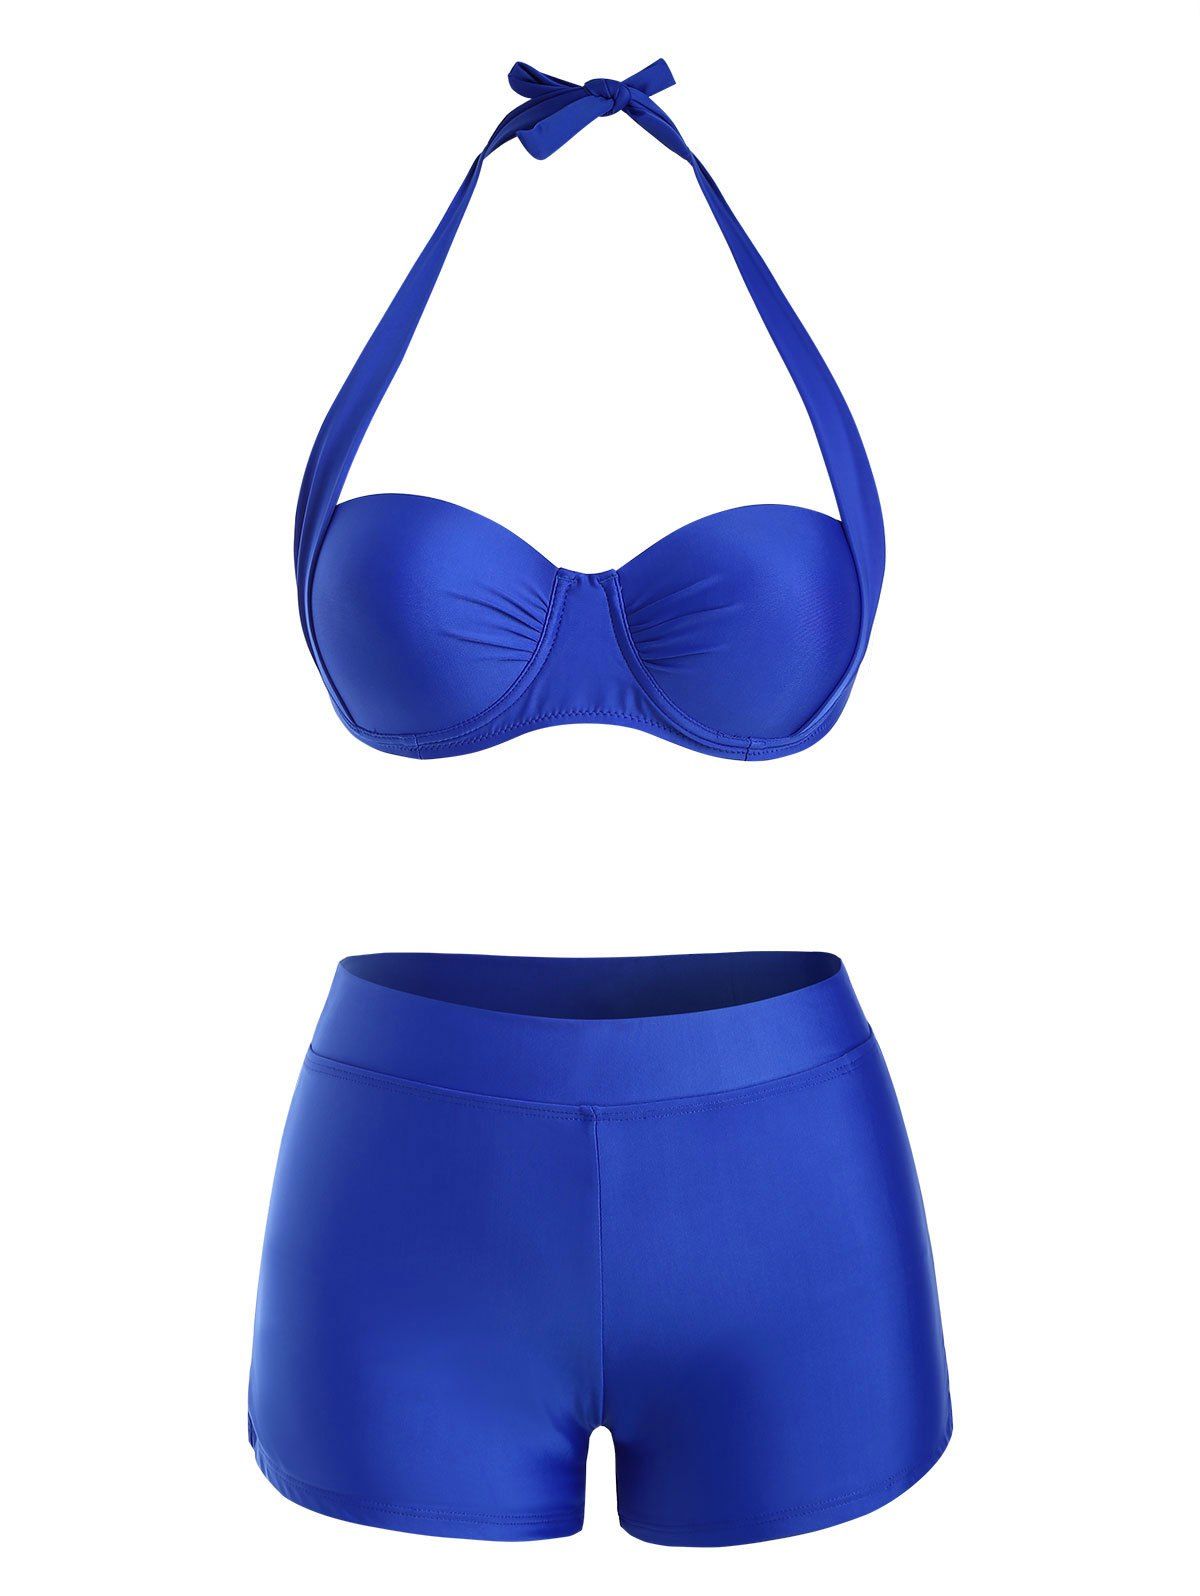 Halter Underwire Boyshorts Push Up Bikini Swimwear - BLUE XL